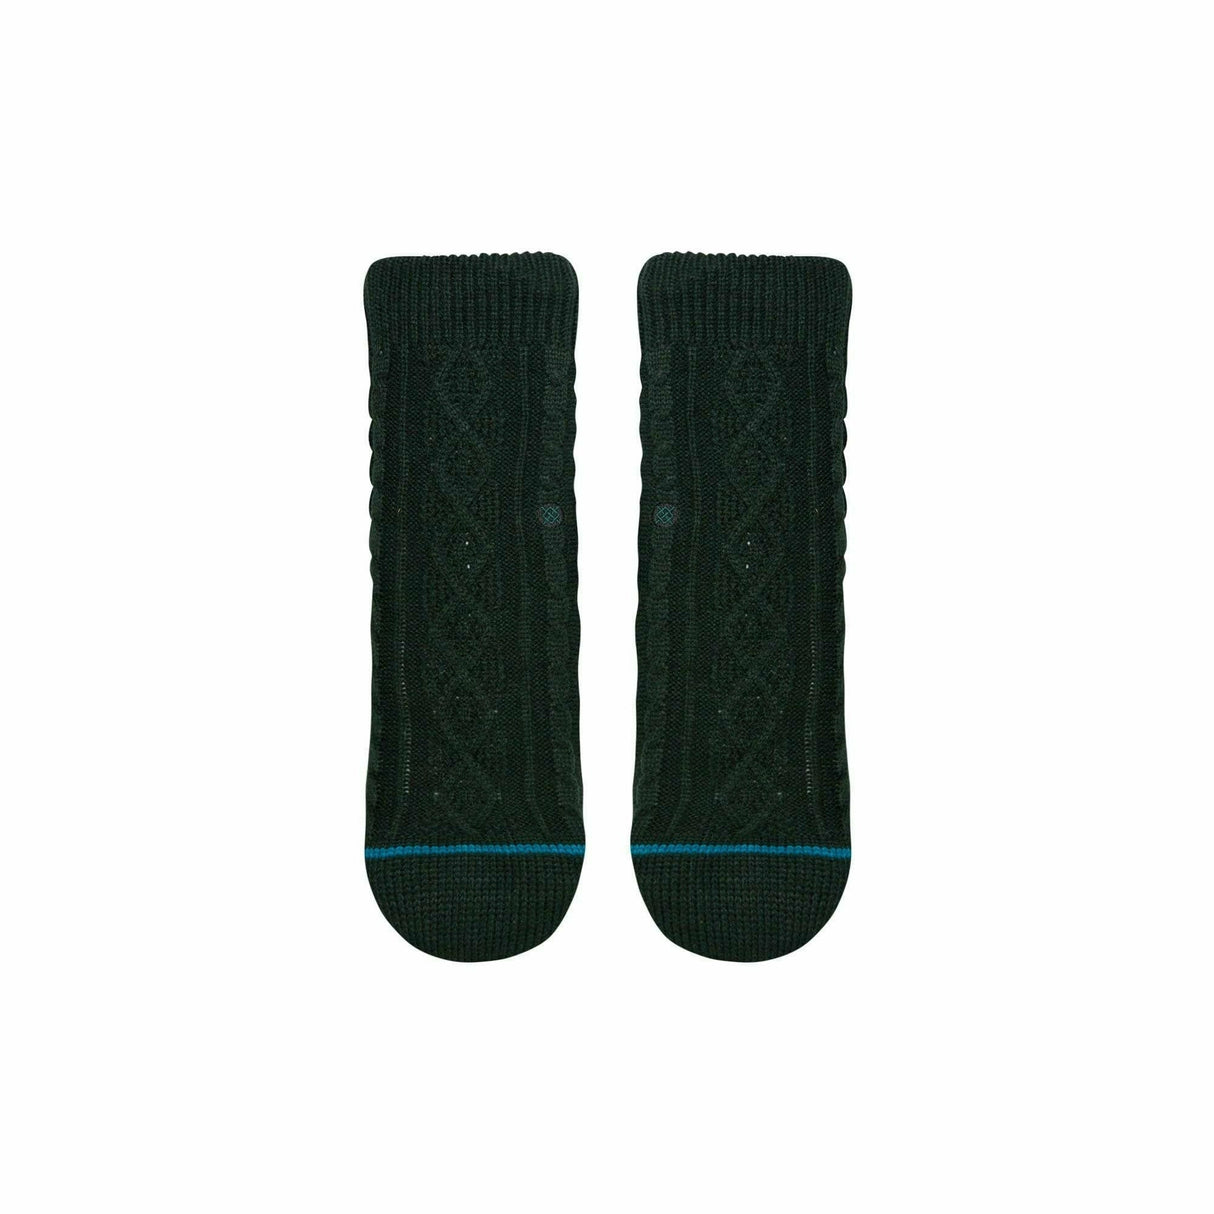 Stance Toasted Slipper Crew Socks  -  Large / Green